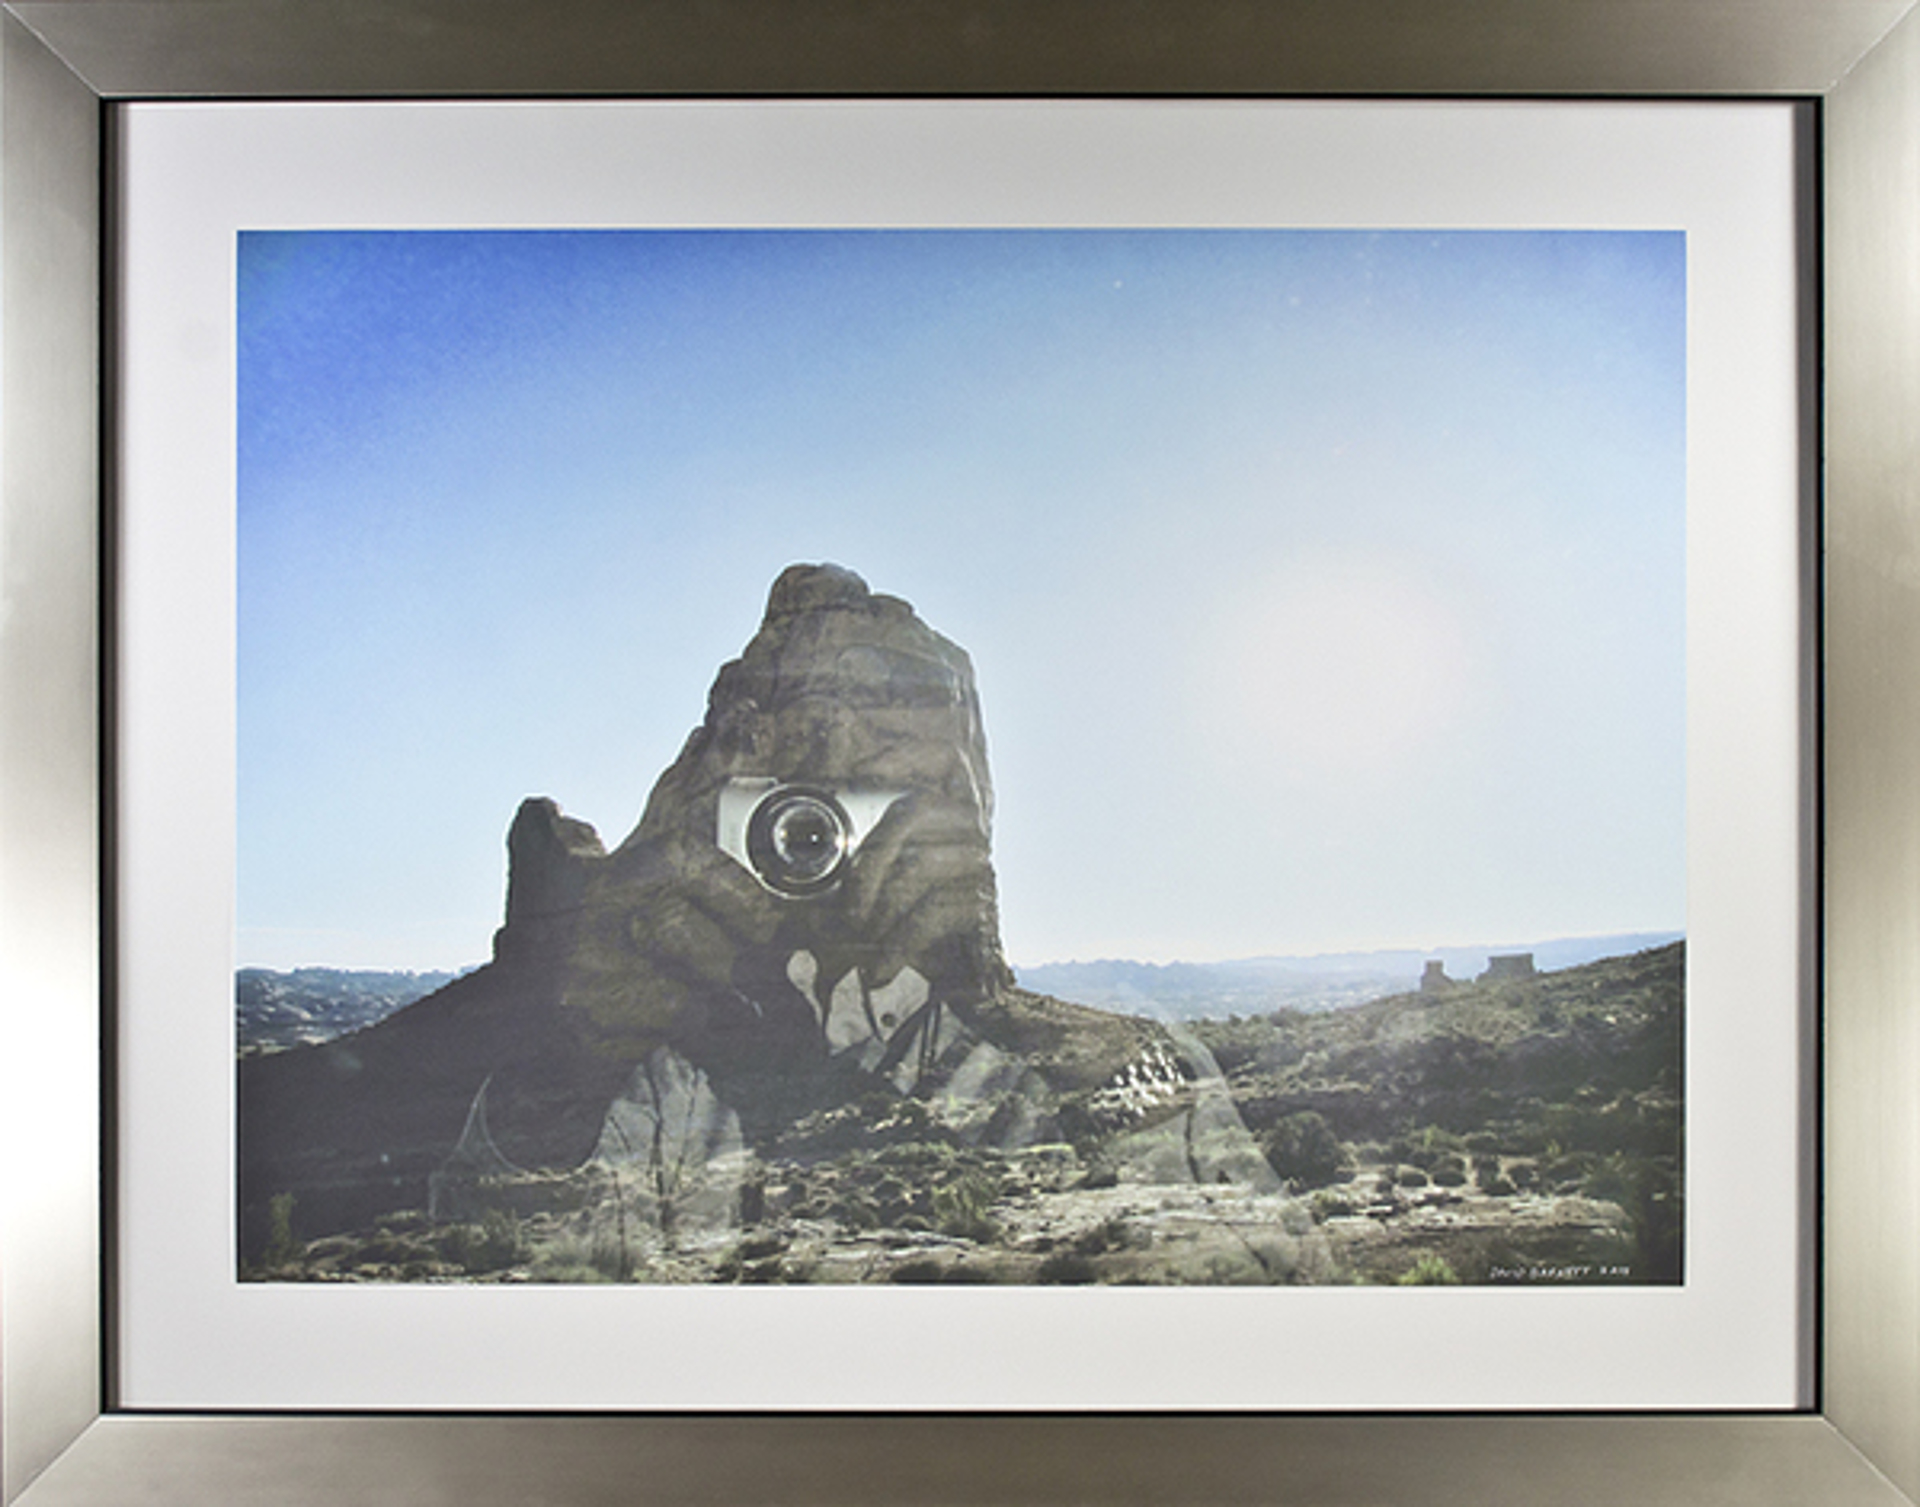 Surreal Reflection - Arches National Park, Moab, Utah by David Barnett